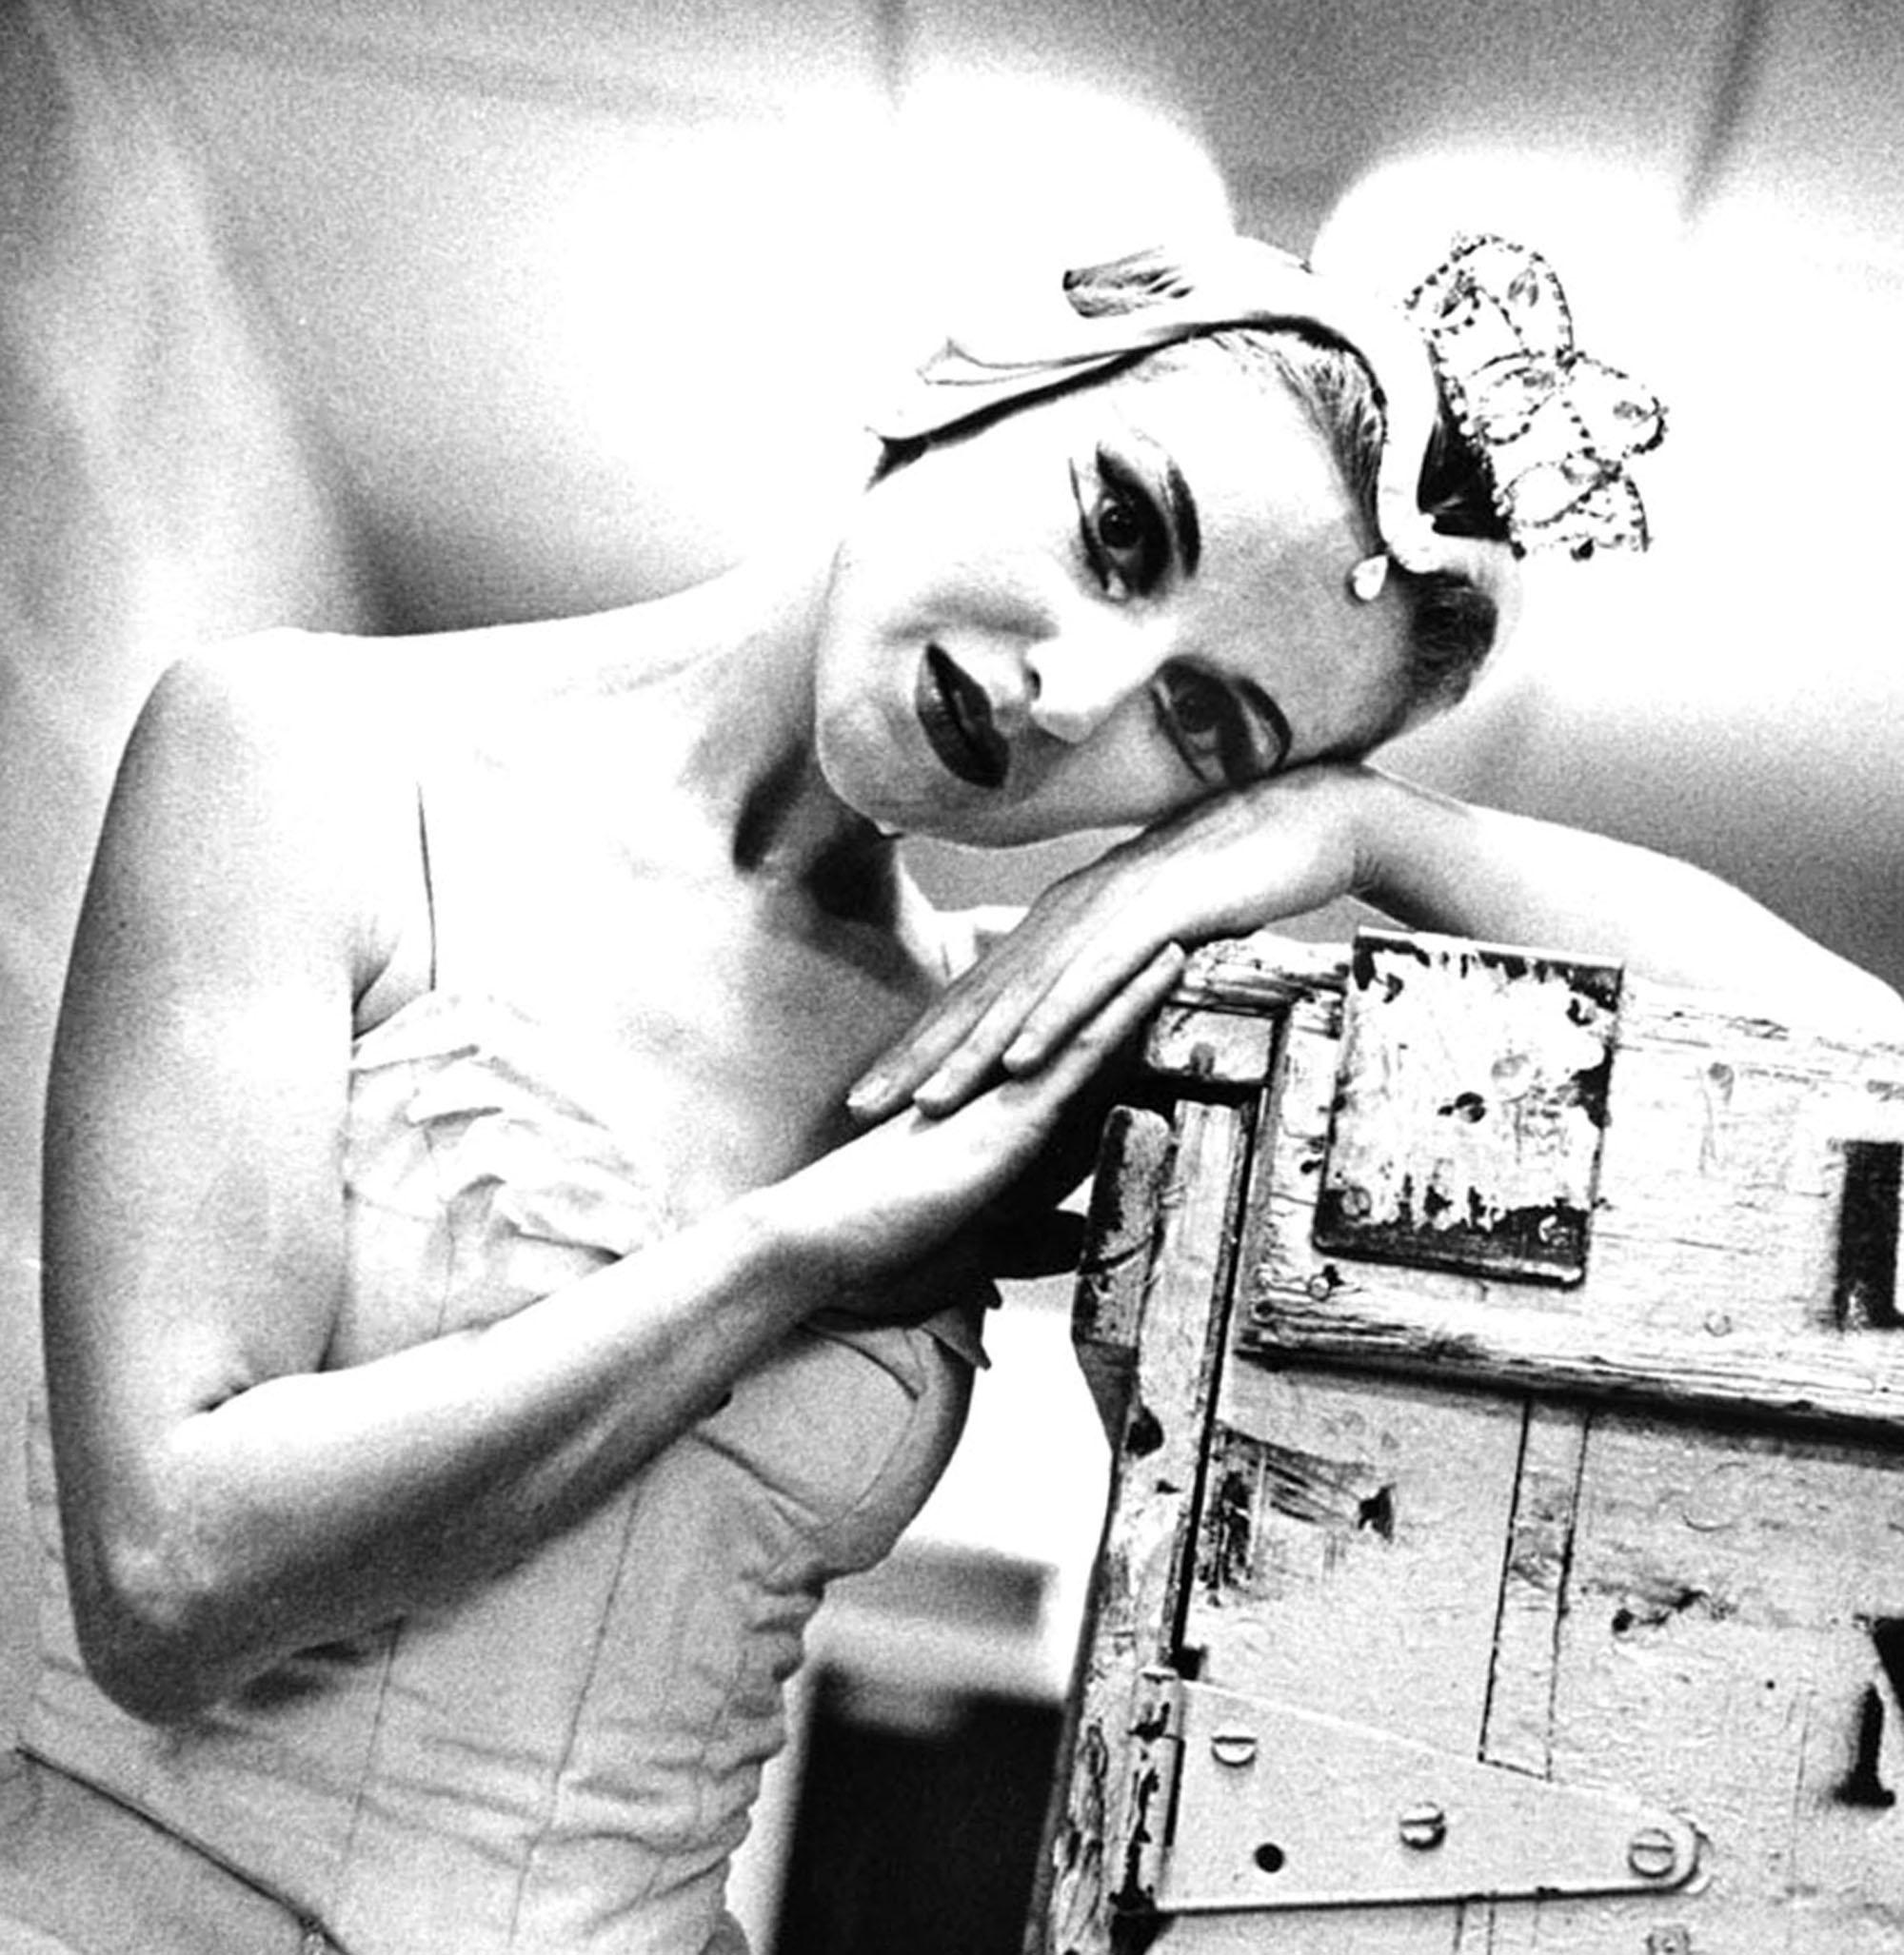  New York City Ballet dancer Violette Verdy backstage - Photograph by Jack Mitchell